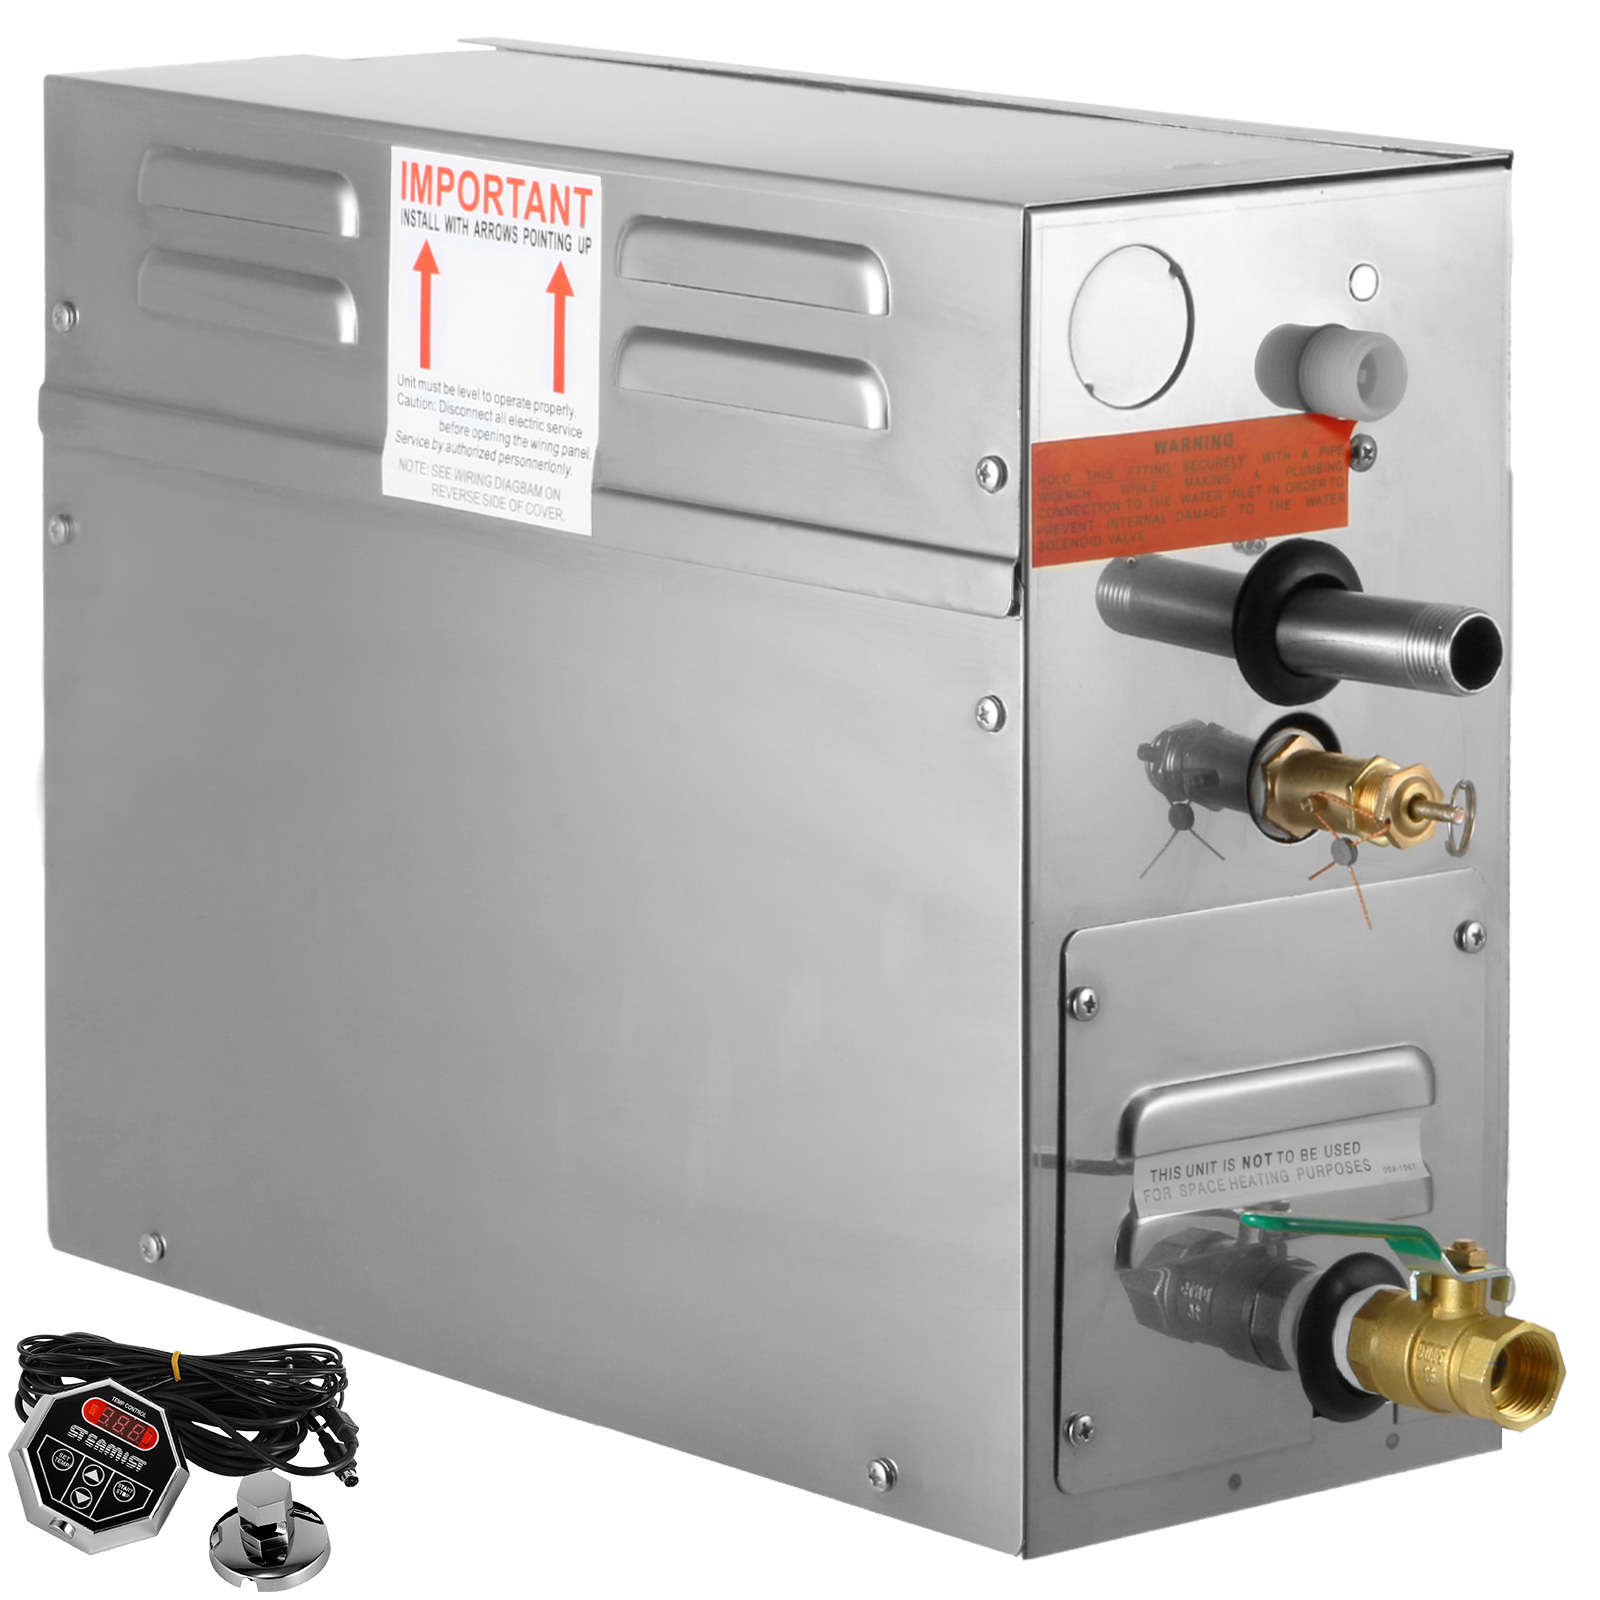 High-quality 4-9KW Steam Generator Multi-functional Sauna Bath Home SPA Shower